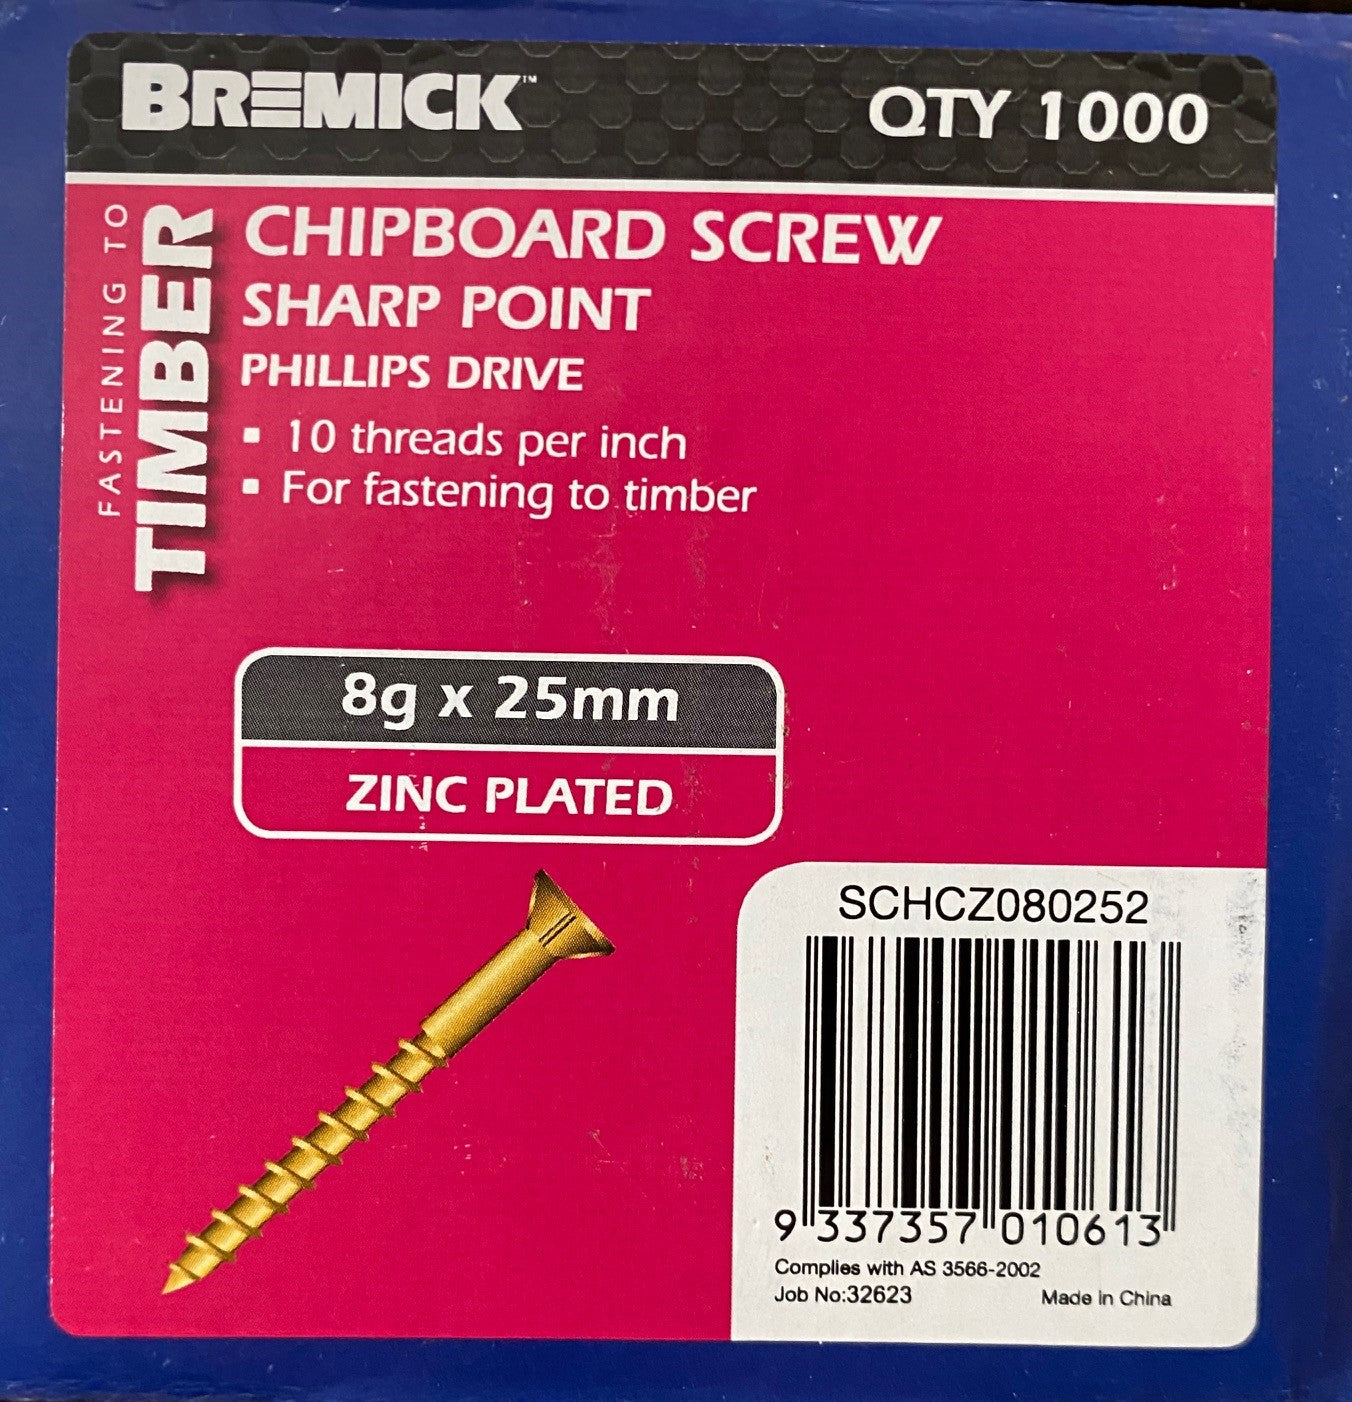 Chipboard Screw 8g x 25mm 1000 in a box